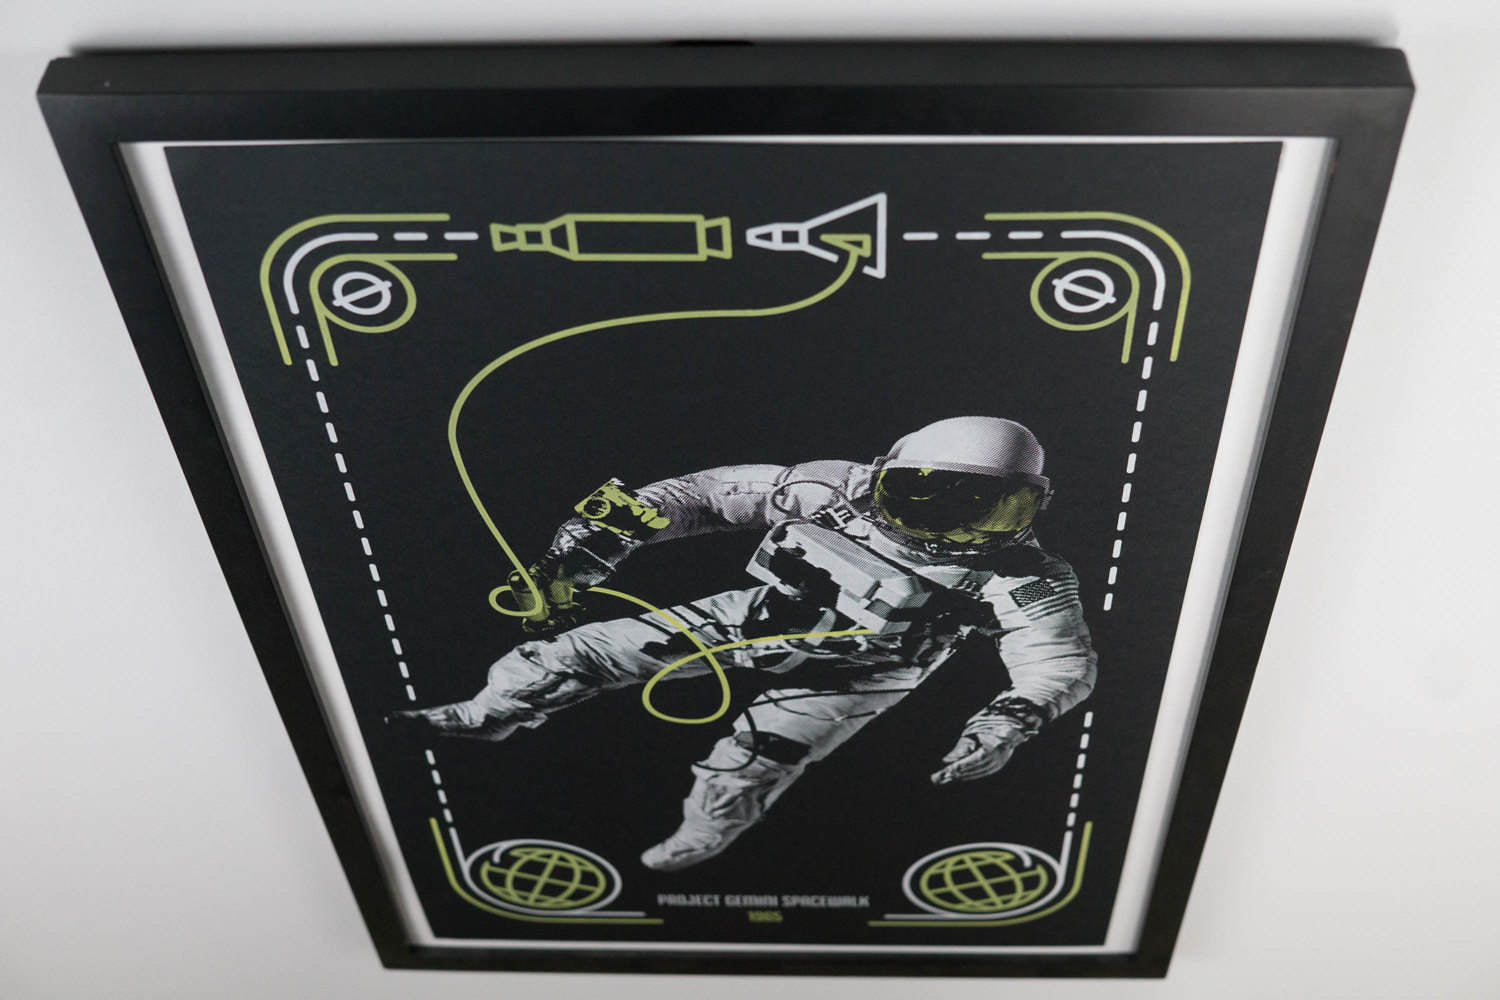 Project Gemini Spacewalk - Space Exploration Poster